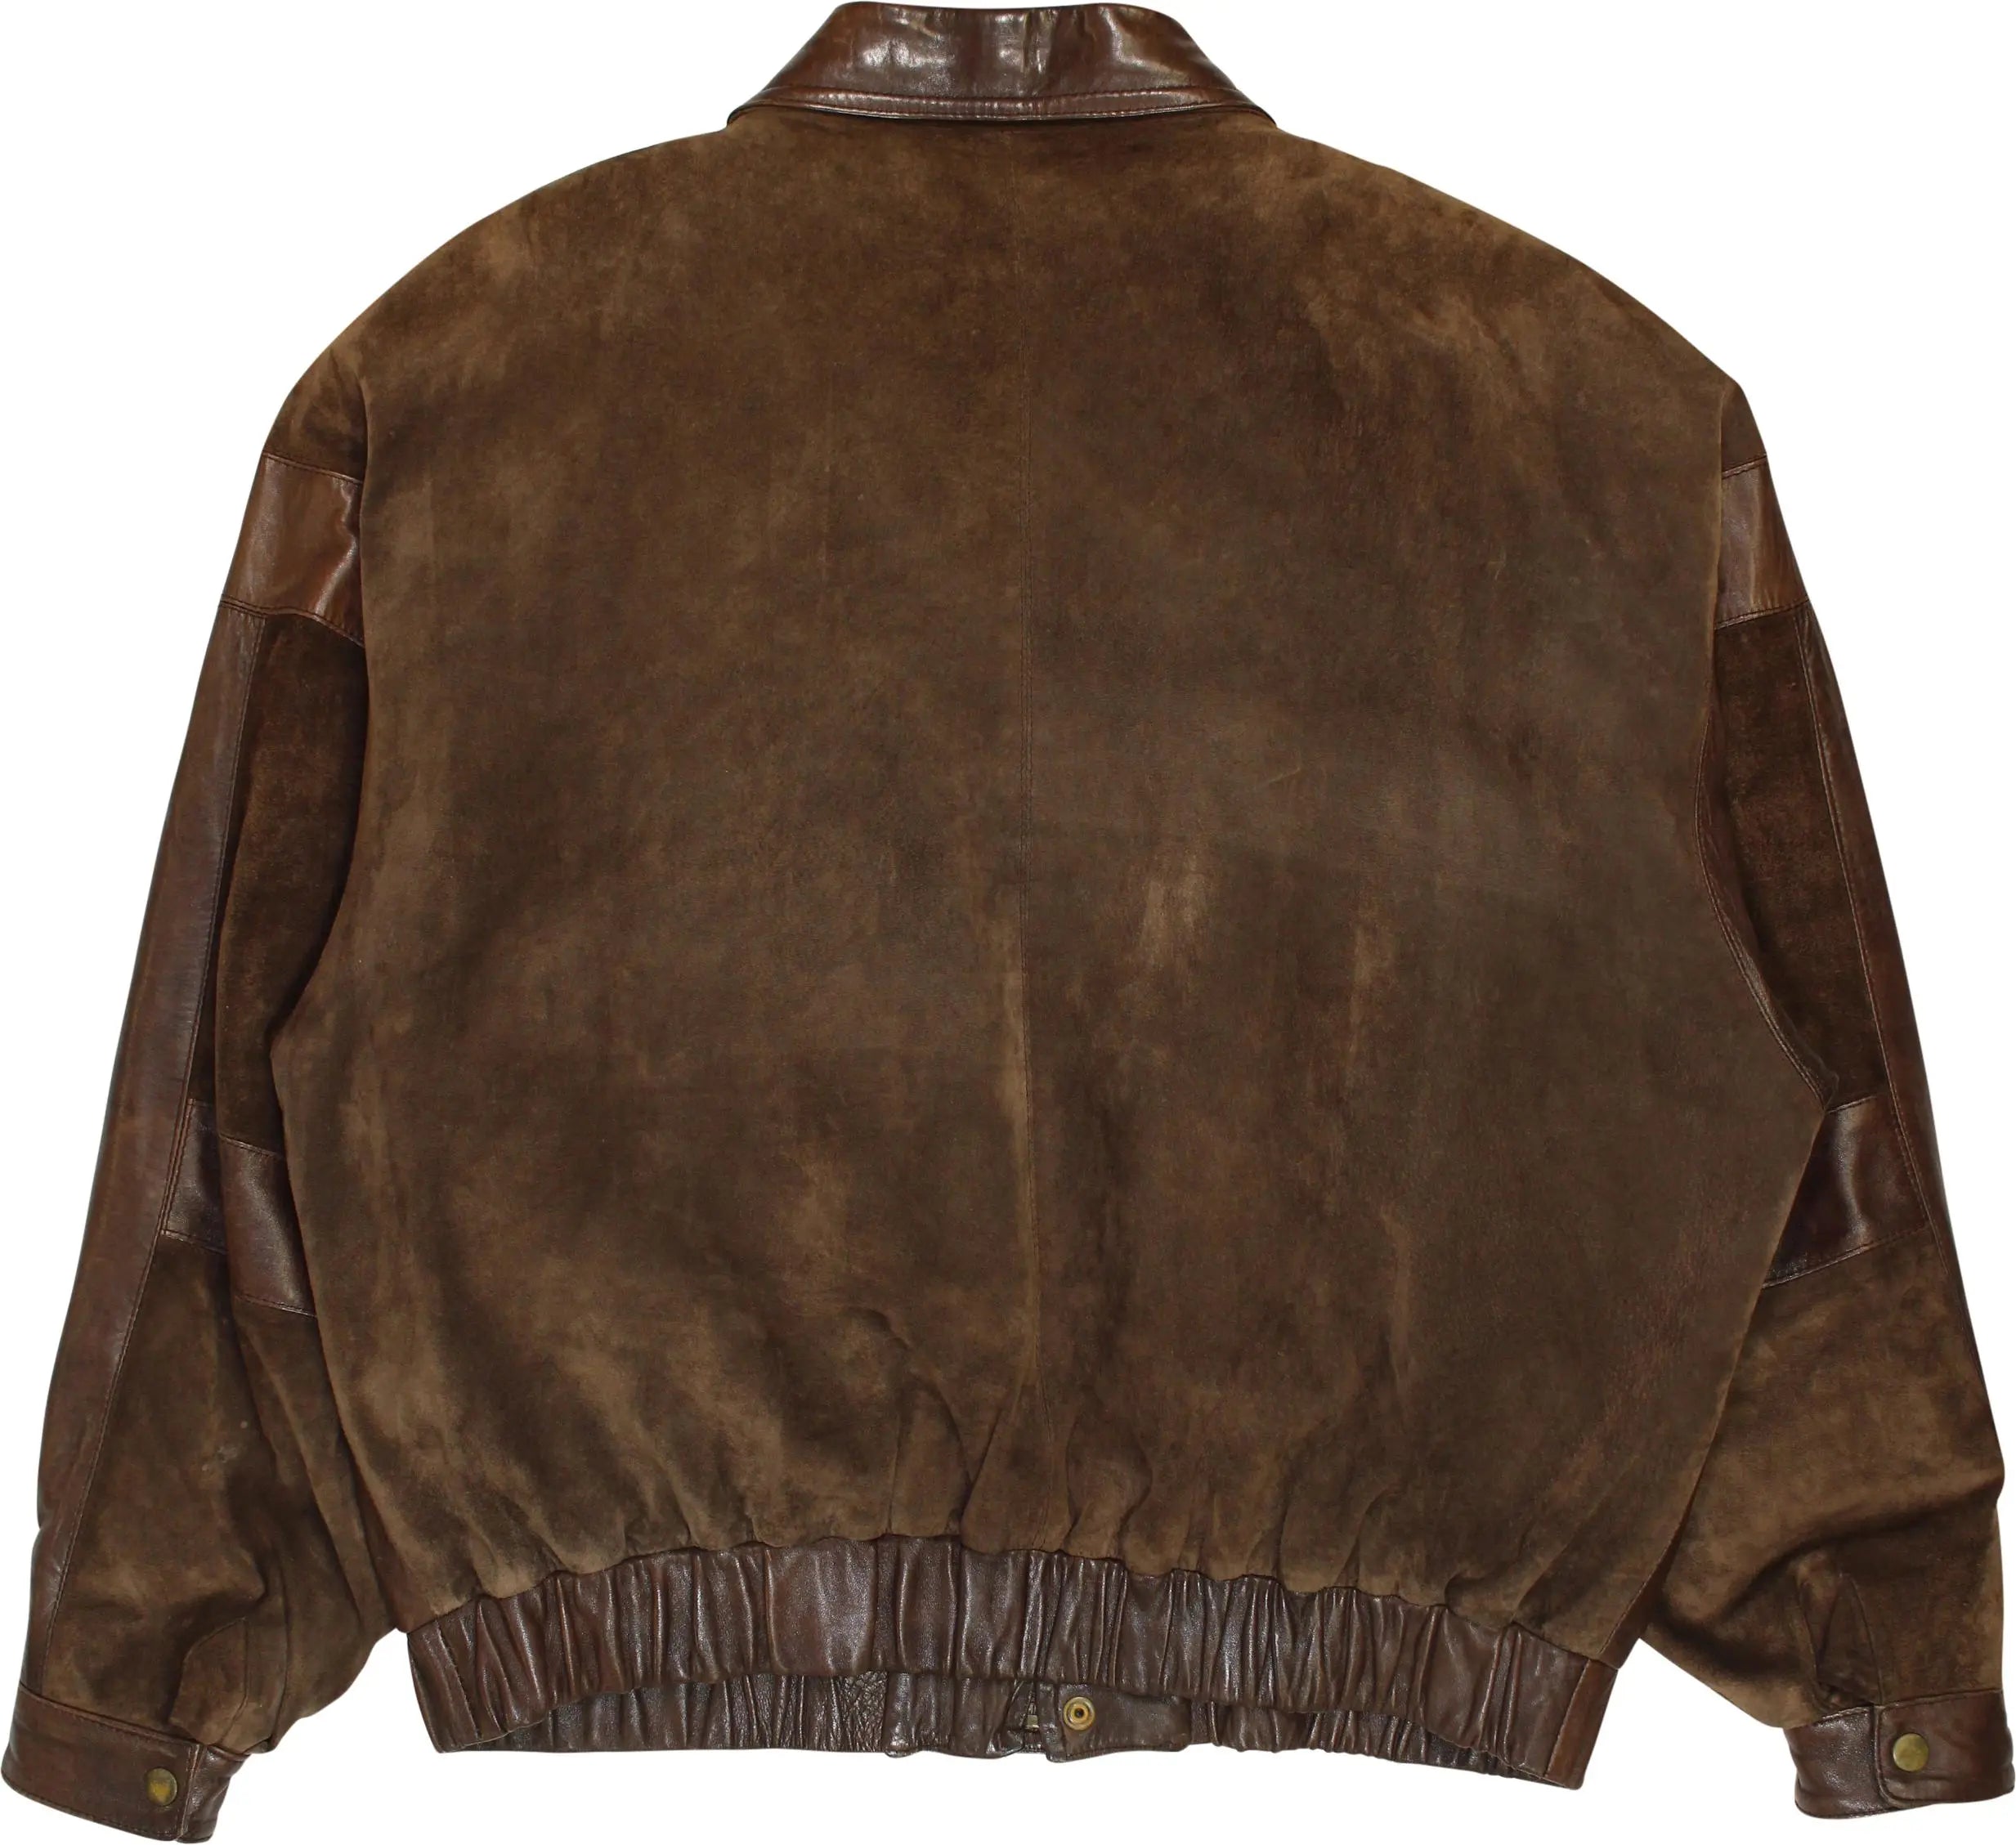 Bissel - Brown Leather Jacket- ThriftTale.com - Vintage and second handclothing